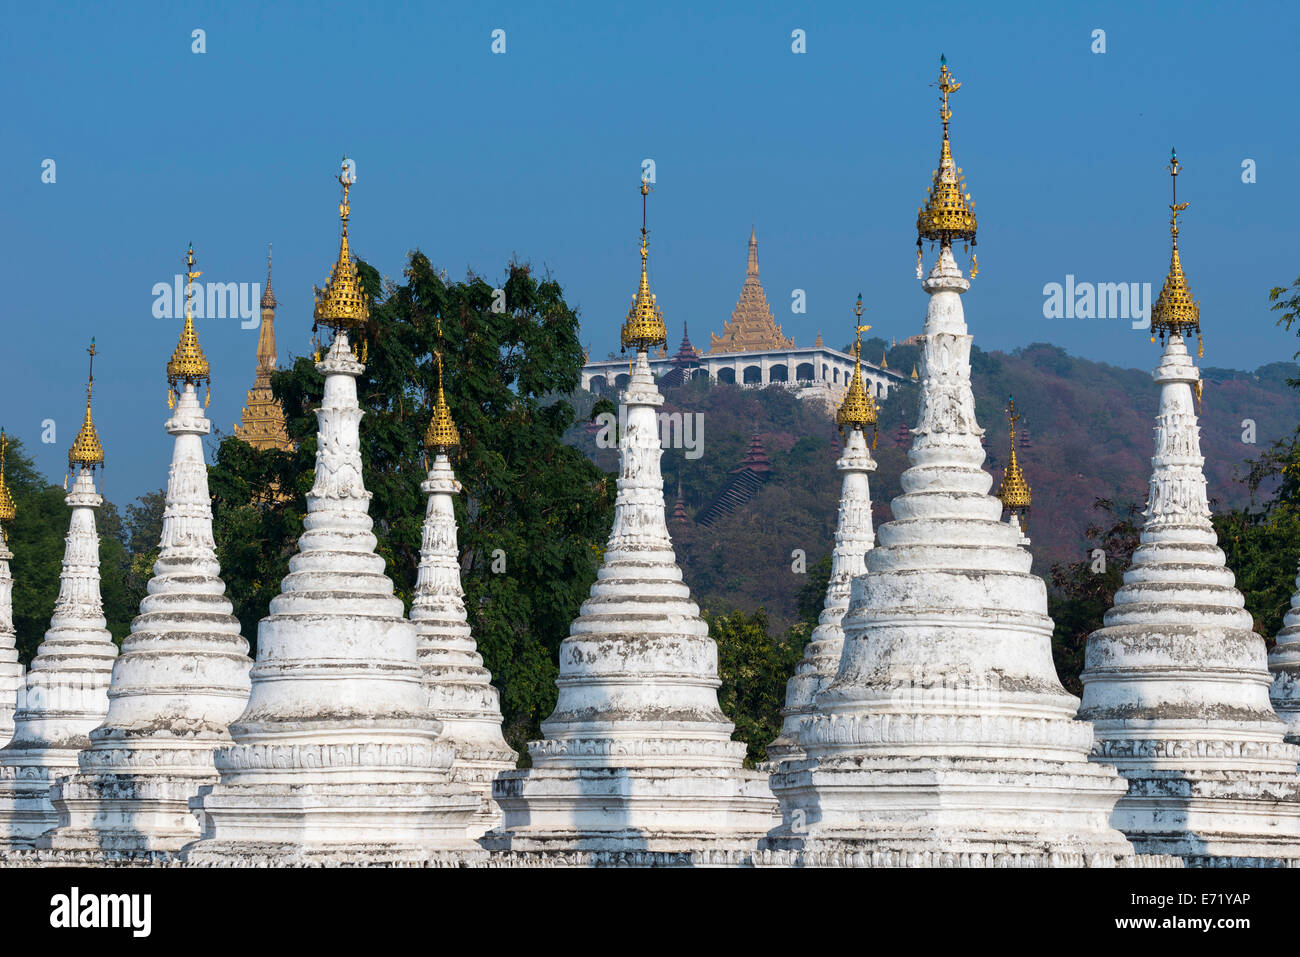 Atthakatha chedis or stupas, Sandamuni Paya or Sandamuni Pagoda, view of Mandalay Hill, temple complex in Mandalay Stock Photo